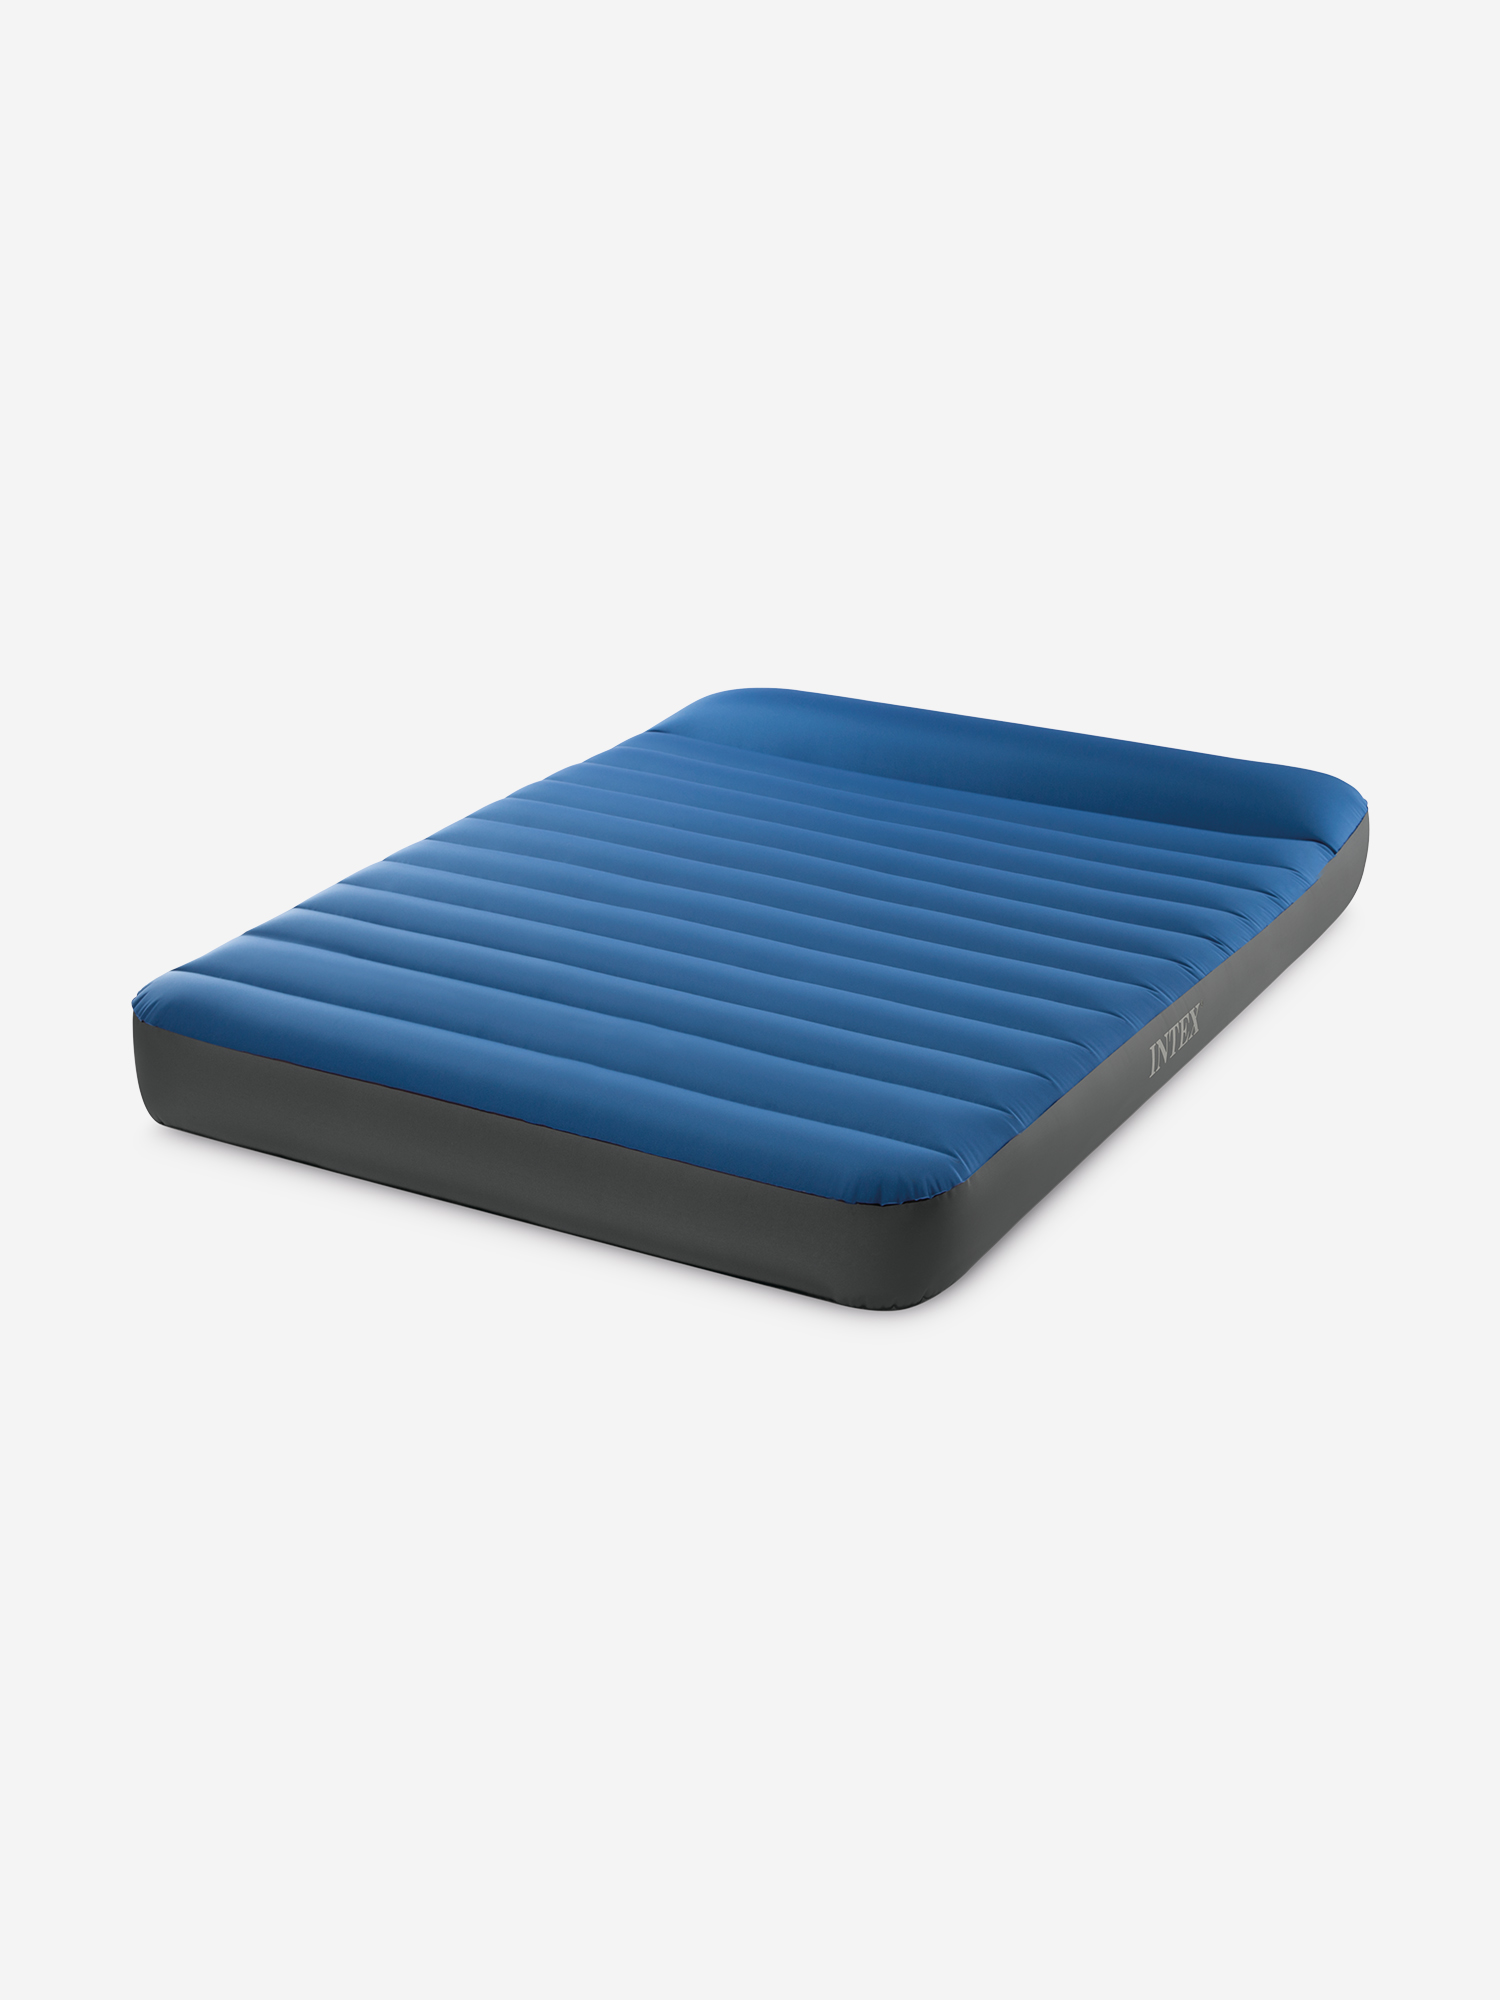 Матрас надувной Intex Full Dura-Beam 137x191x22 см, Синий кровать intex dura beam pillow rest classic full 64142 137x191x26